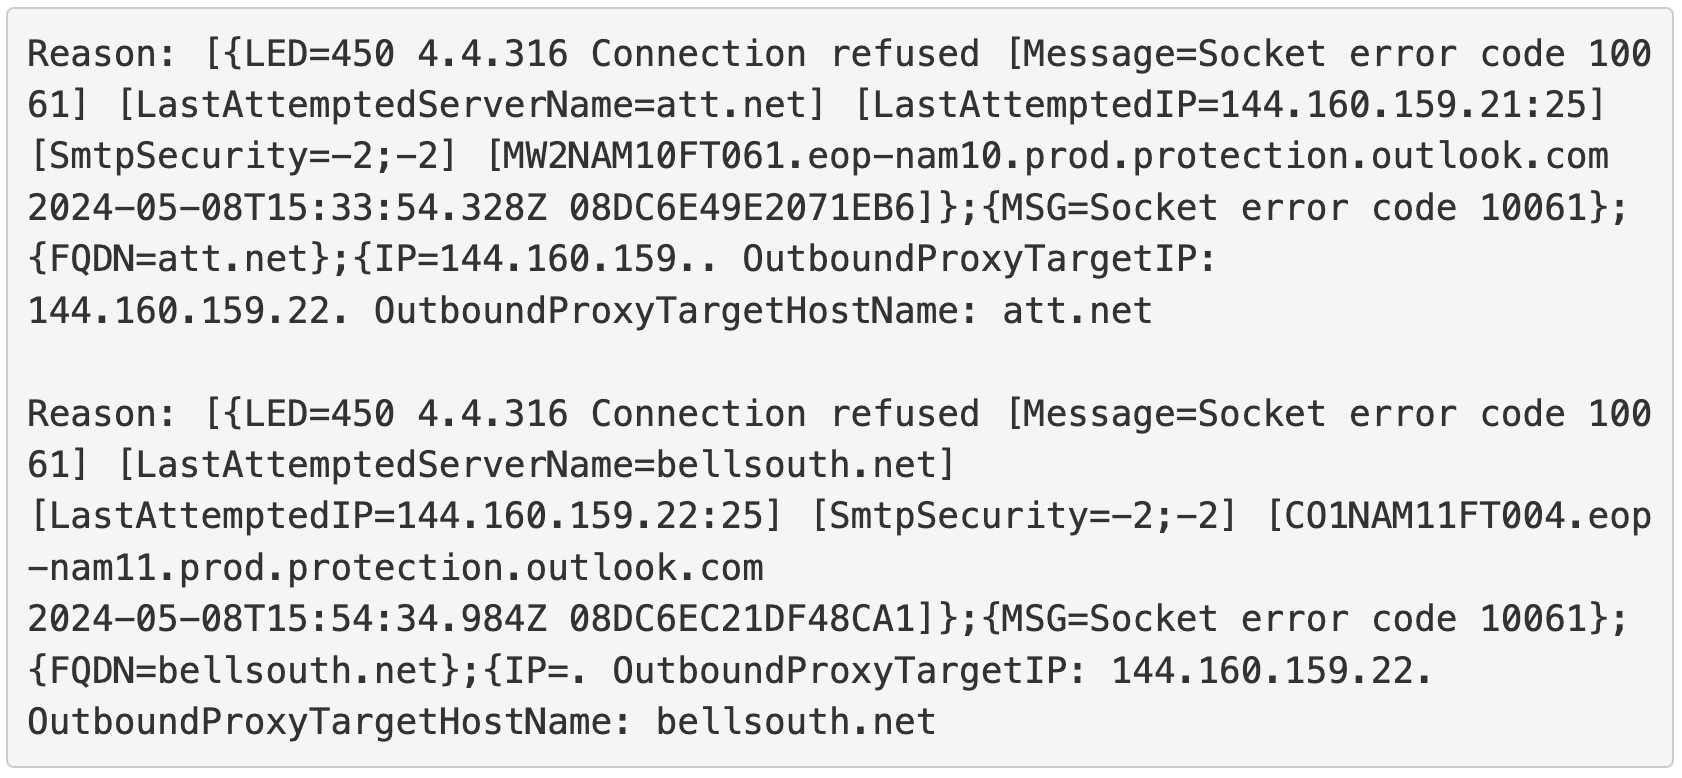 AT&T Postpones Microsoft 365 and Gmail Email Delivery Amid Spam Surge

AT&T Postpones Microsoft 365 and Gmail Email Delivery Amid Spam Surge
